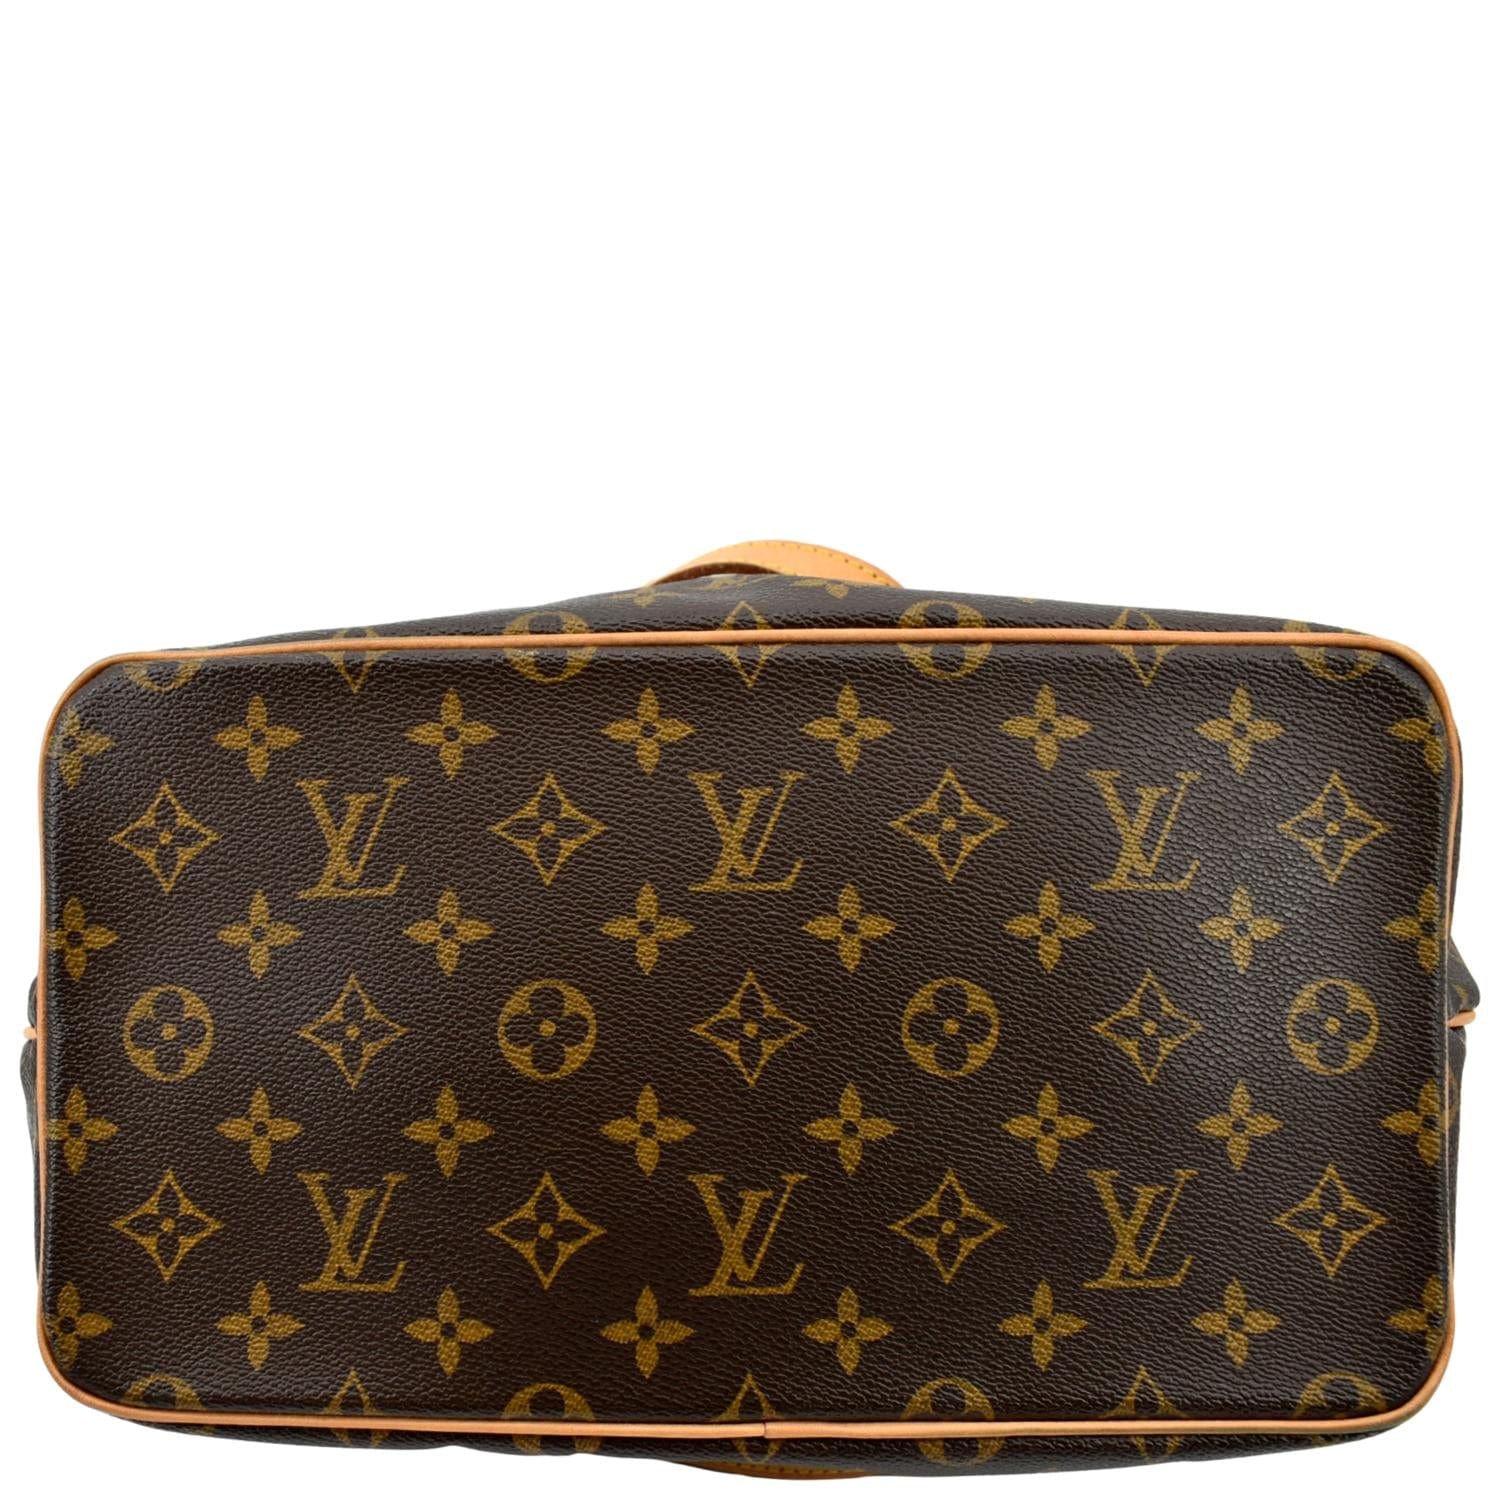 Mint condition Louis Vuitton Palmero PM $1650 at Va Beach store #doubletake  #designerfashion